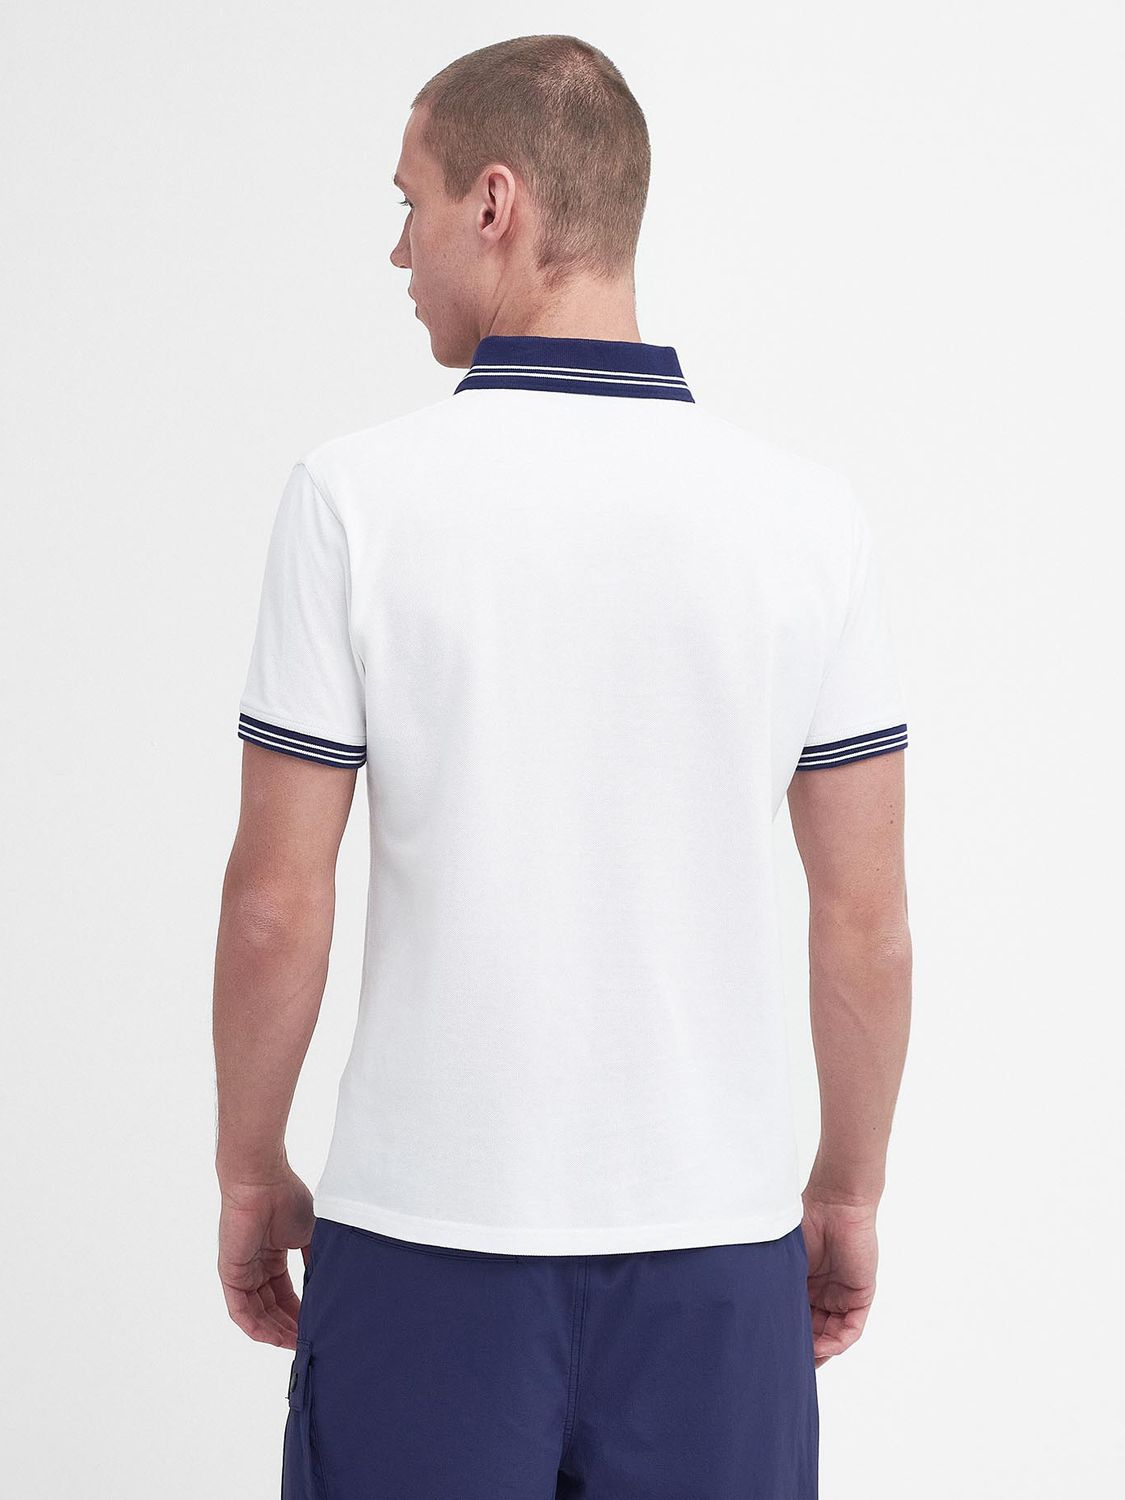 Barbour International Tracker Polo Shirt, Bright White, S